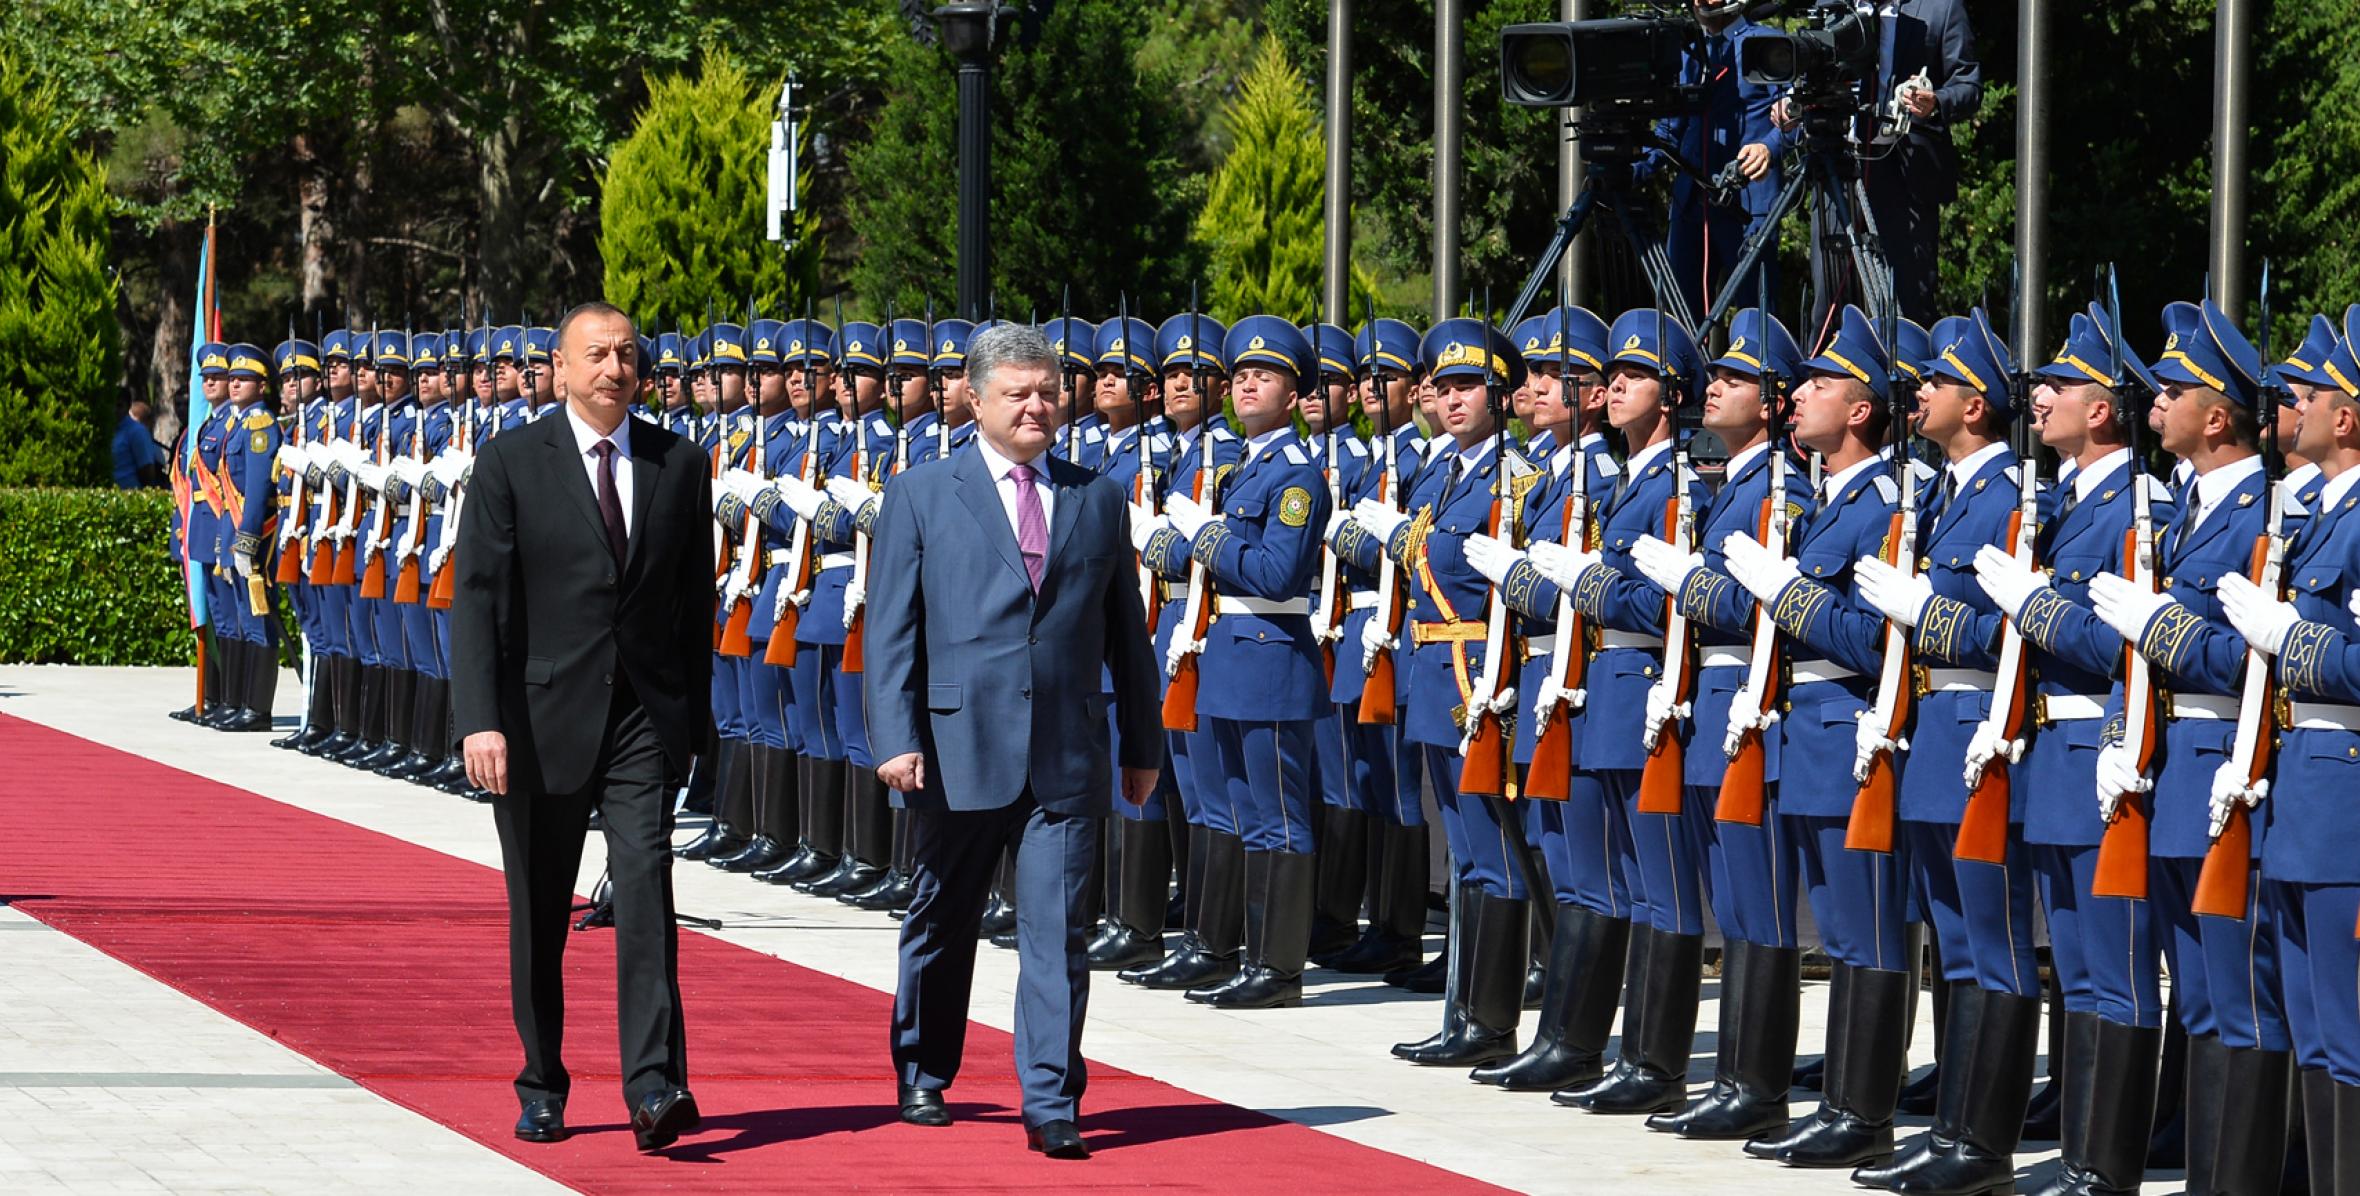 Official welcoming ceremony was held for Ukrainian President Petro Poroshenko